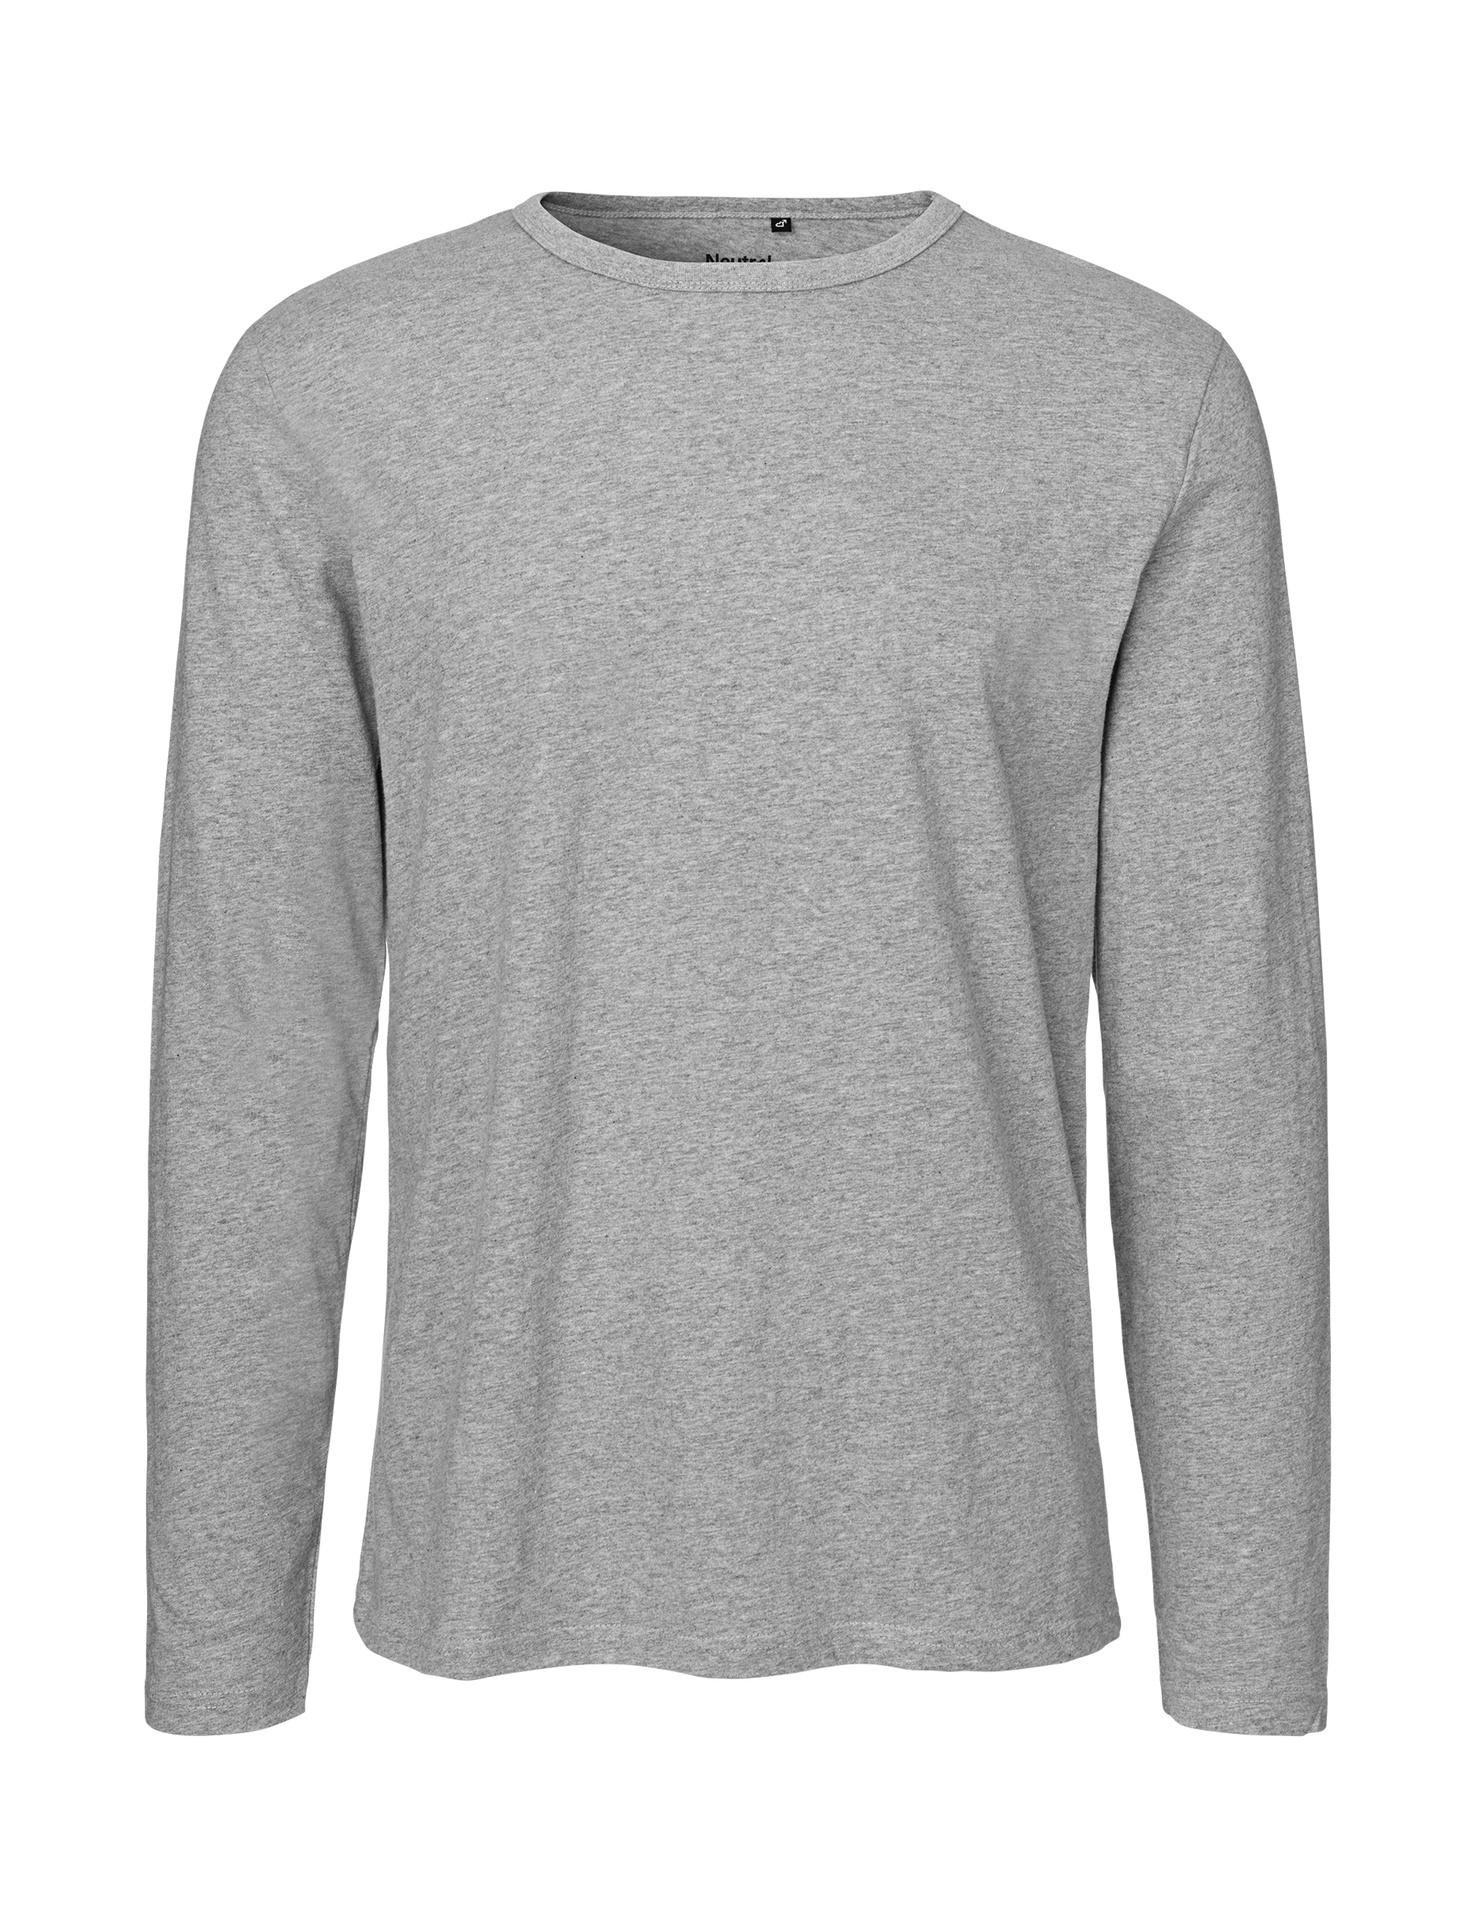 [PR/02398] Mens Long Sleeve T-Shirt (Sport Grey 21, S)